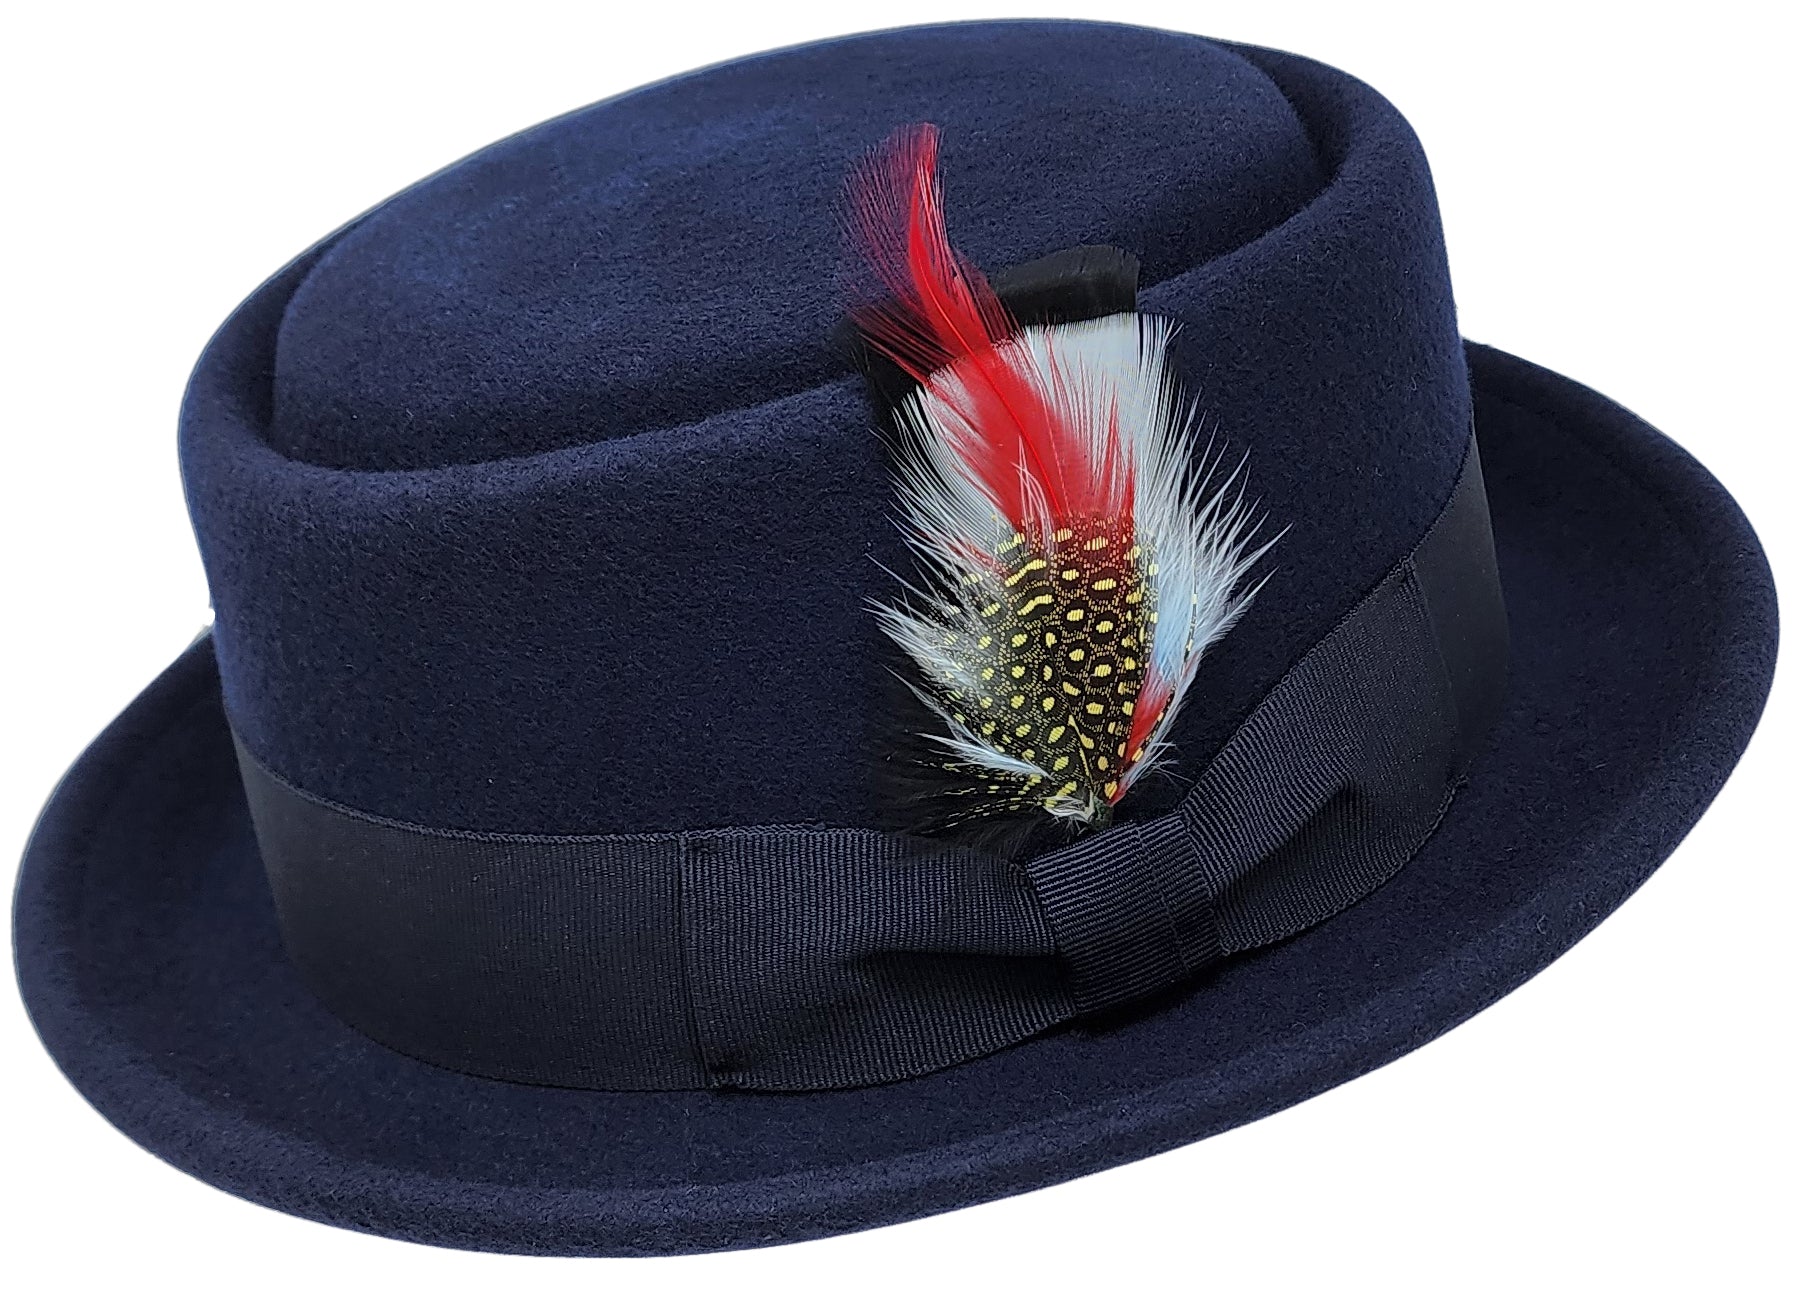 Blue fedora hat